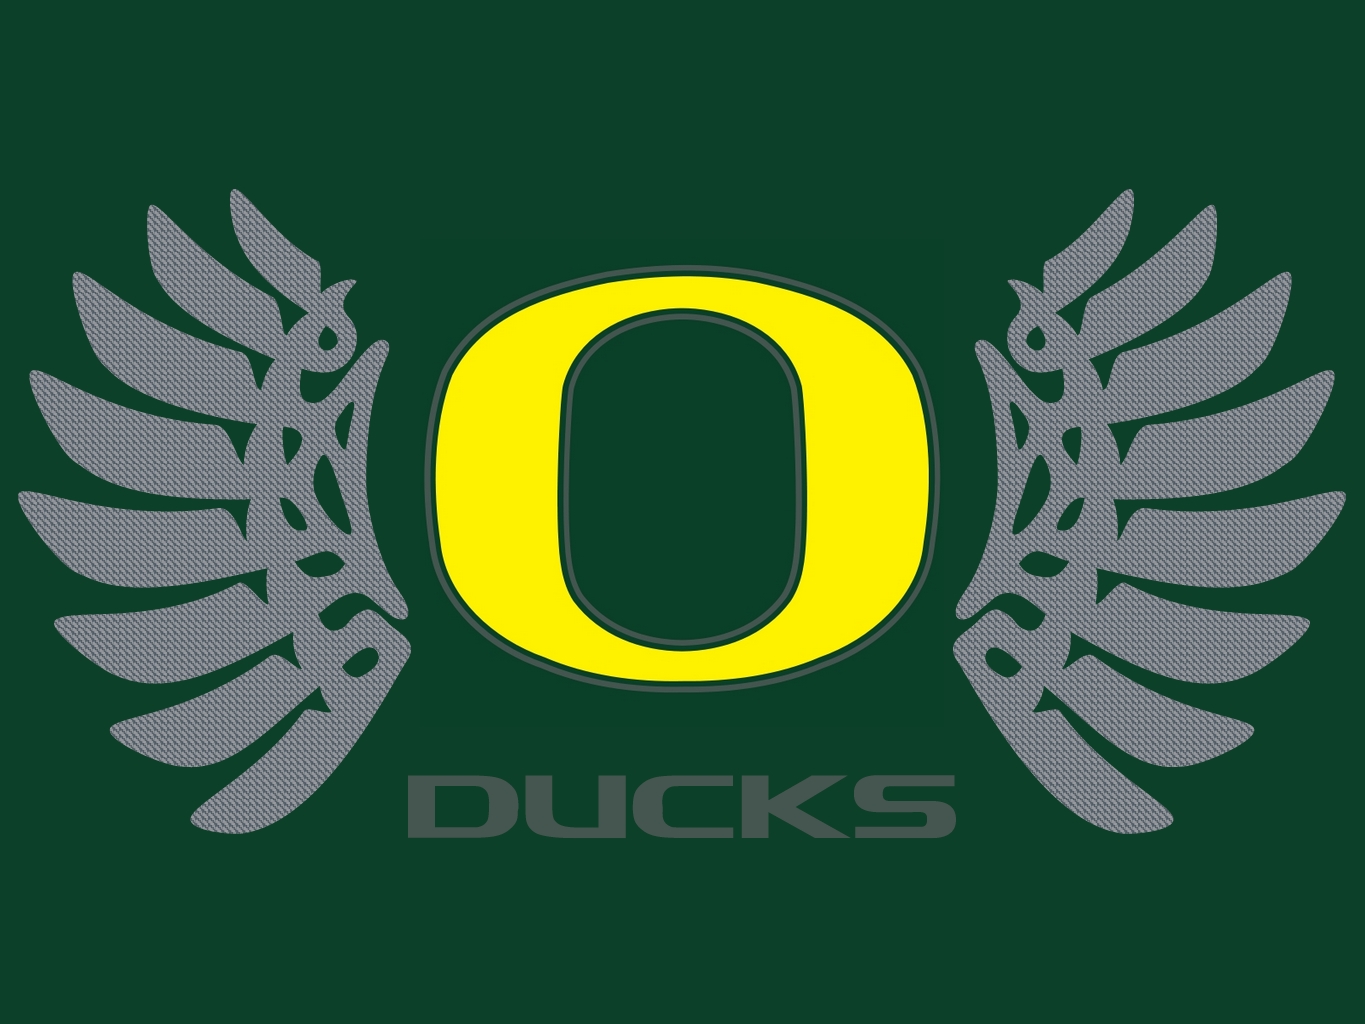 Oregon Ducks Logo Wallpaper Image High Resolution